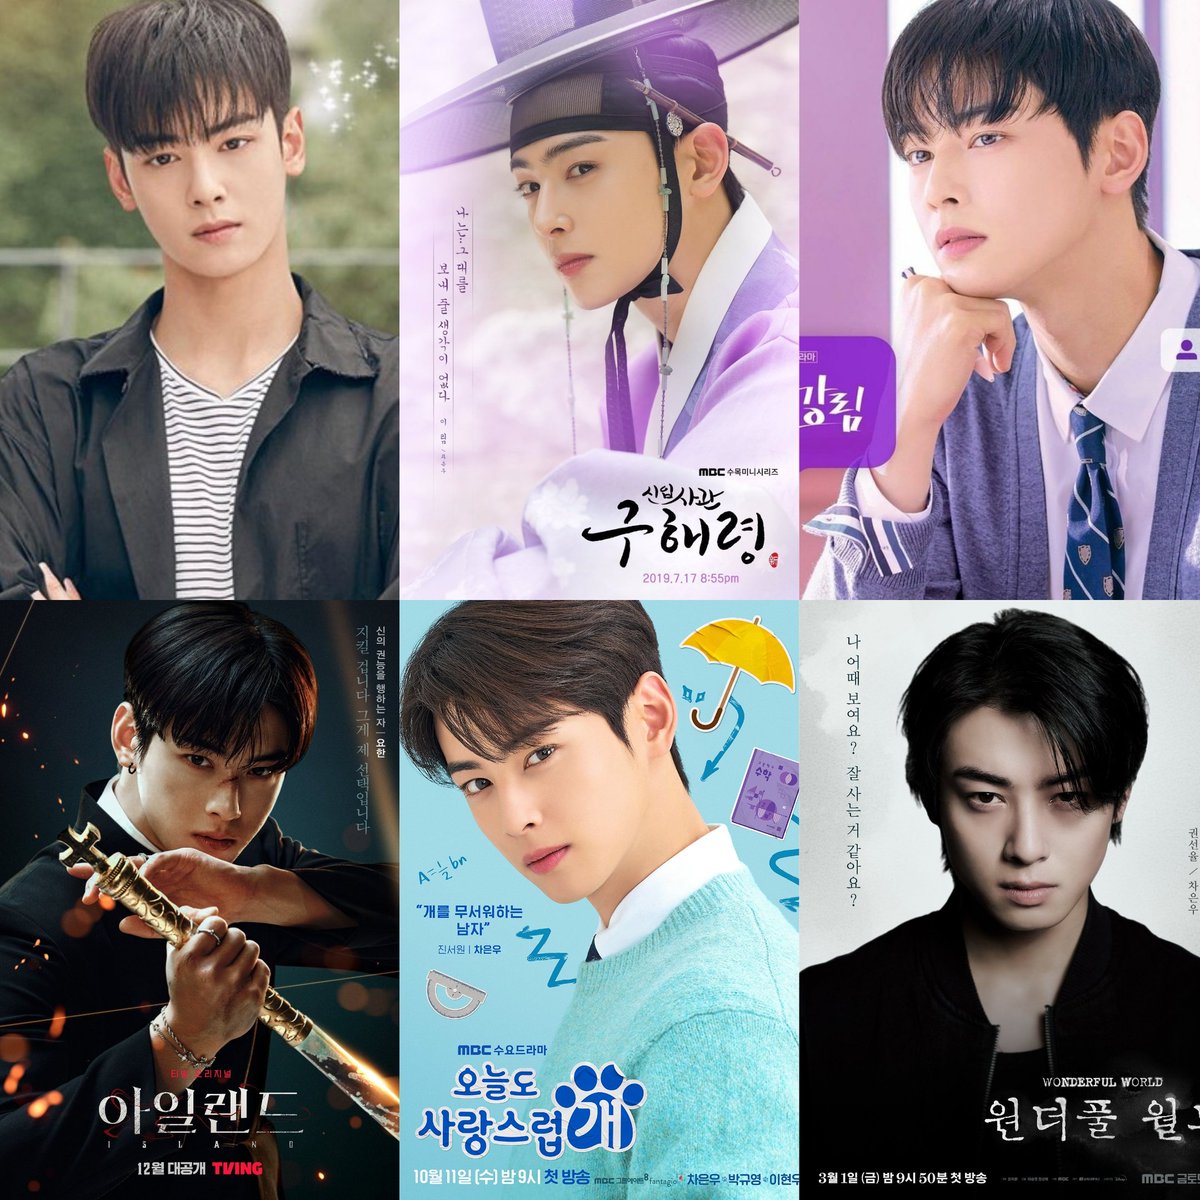 📊 Cha Eunwoo's Drama Actor Brand Reputation Rankings for his dramas

#4 — (2018) #MyIDisGangnamBeauty
#3 — (2019) #RookieHistorianGooHaeryung 
#2 — (2020 - 2021) #TrueBeauty
#4 — (2022 - 2023) #Island
#4 — (2023) #AGoodDayToBeADog
#2 — (2024) #WonderfulWorld

#CHAEUNWOO #차은우…